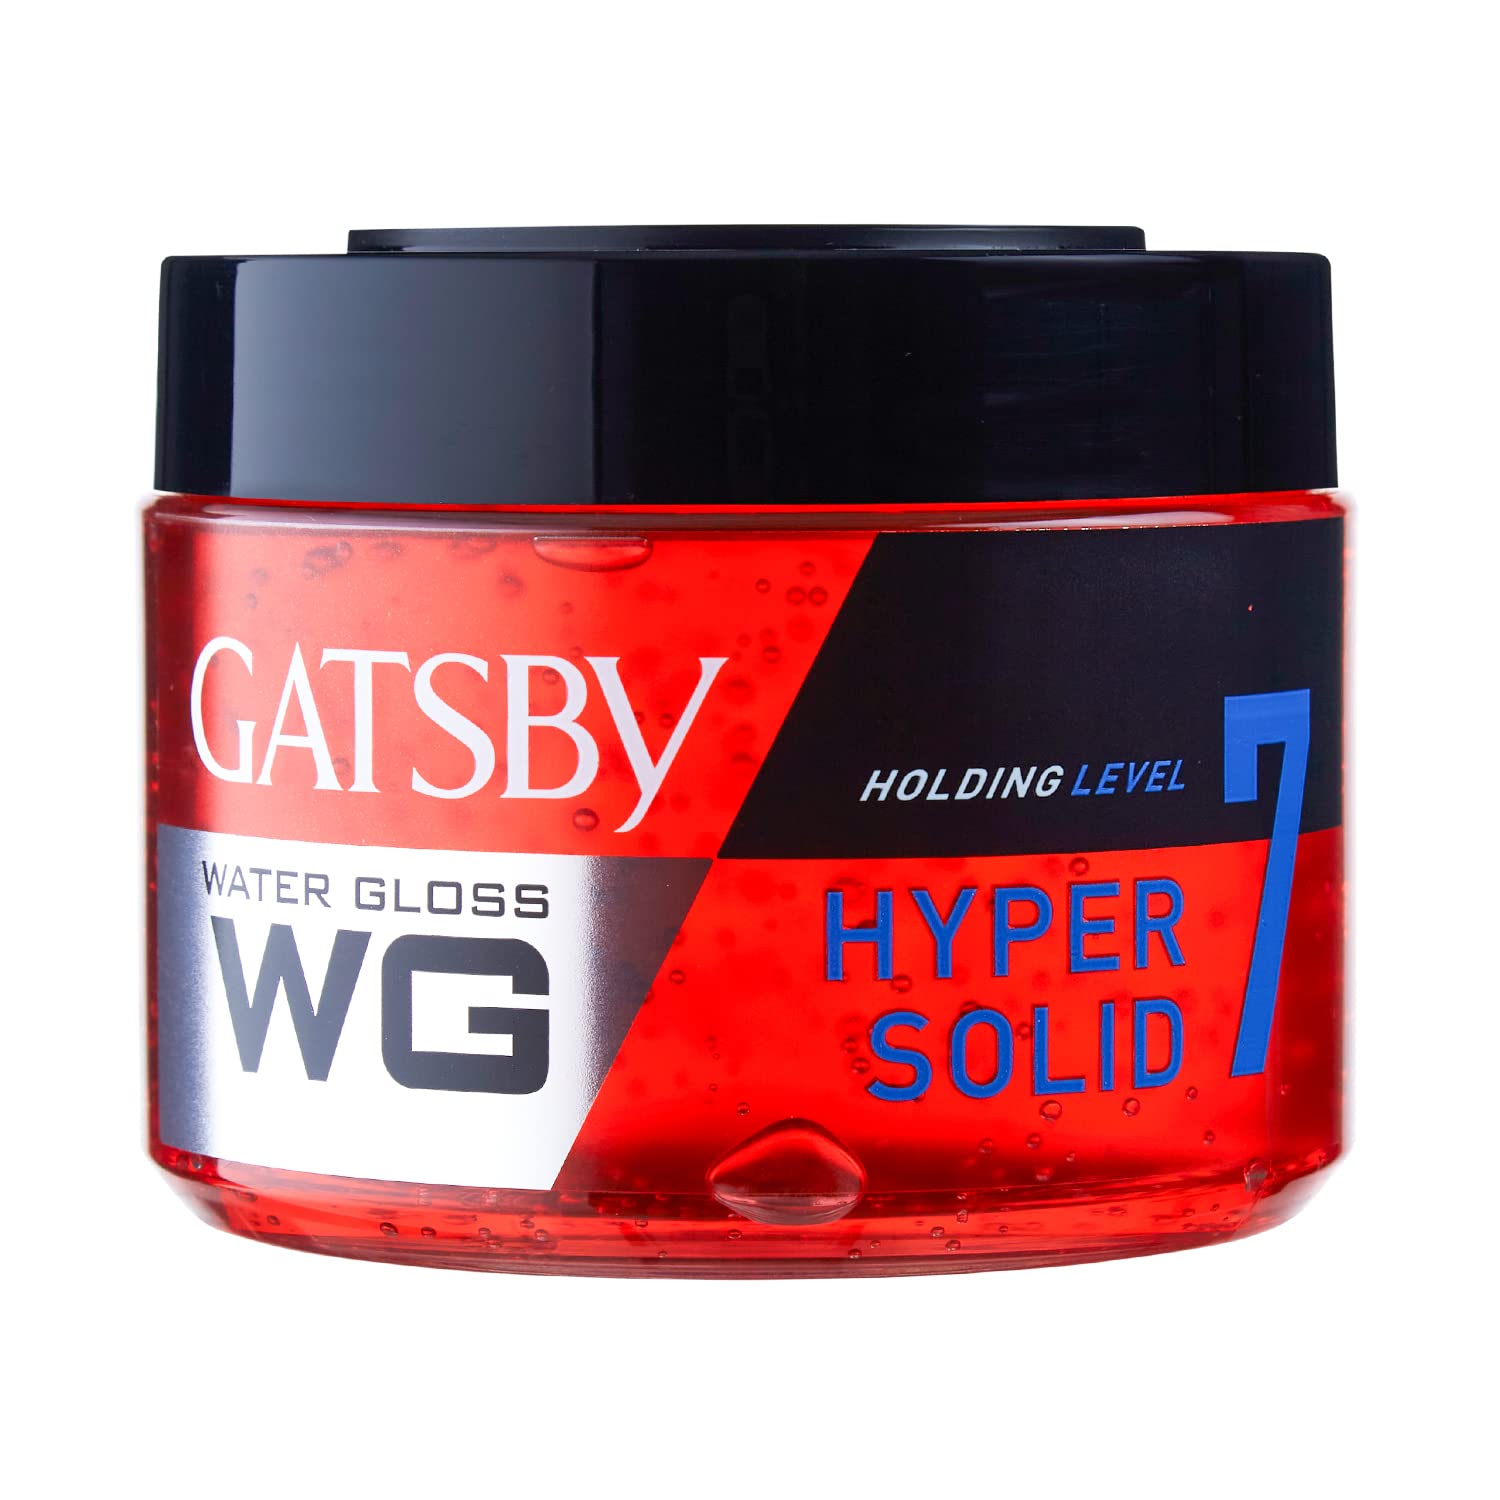 gatsby-water-gloss-hair-gel